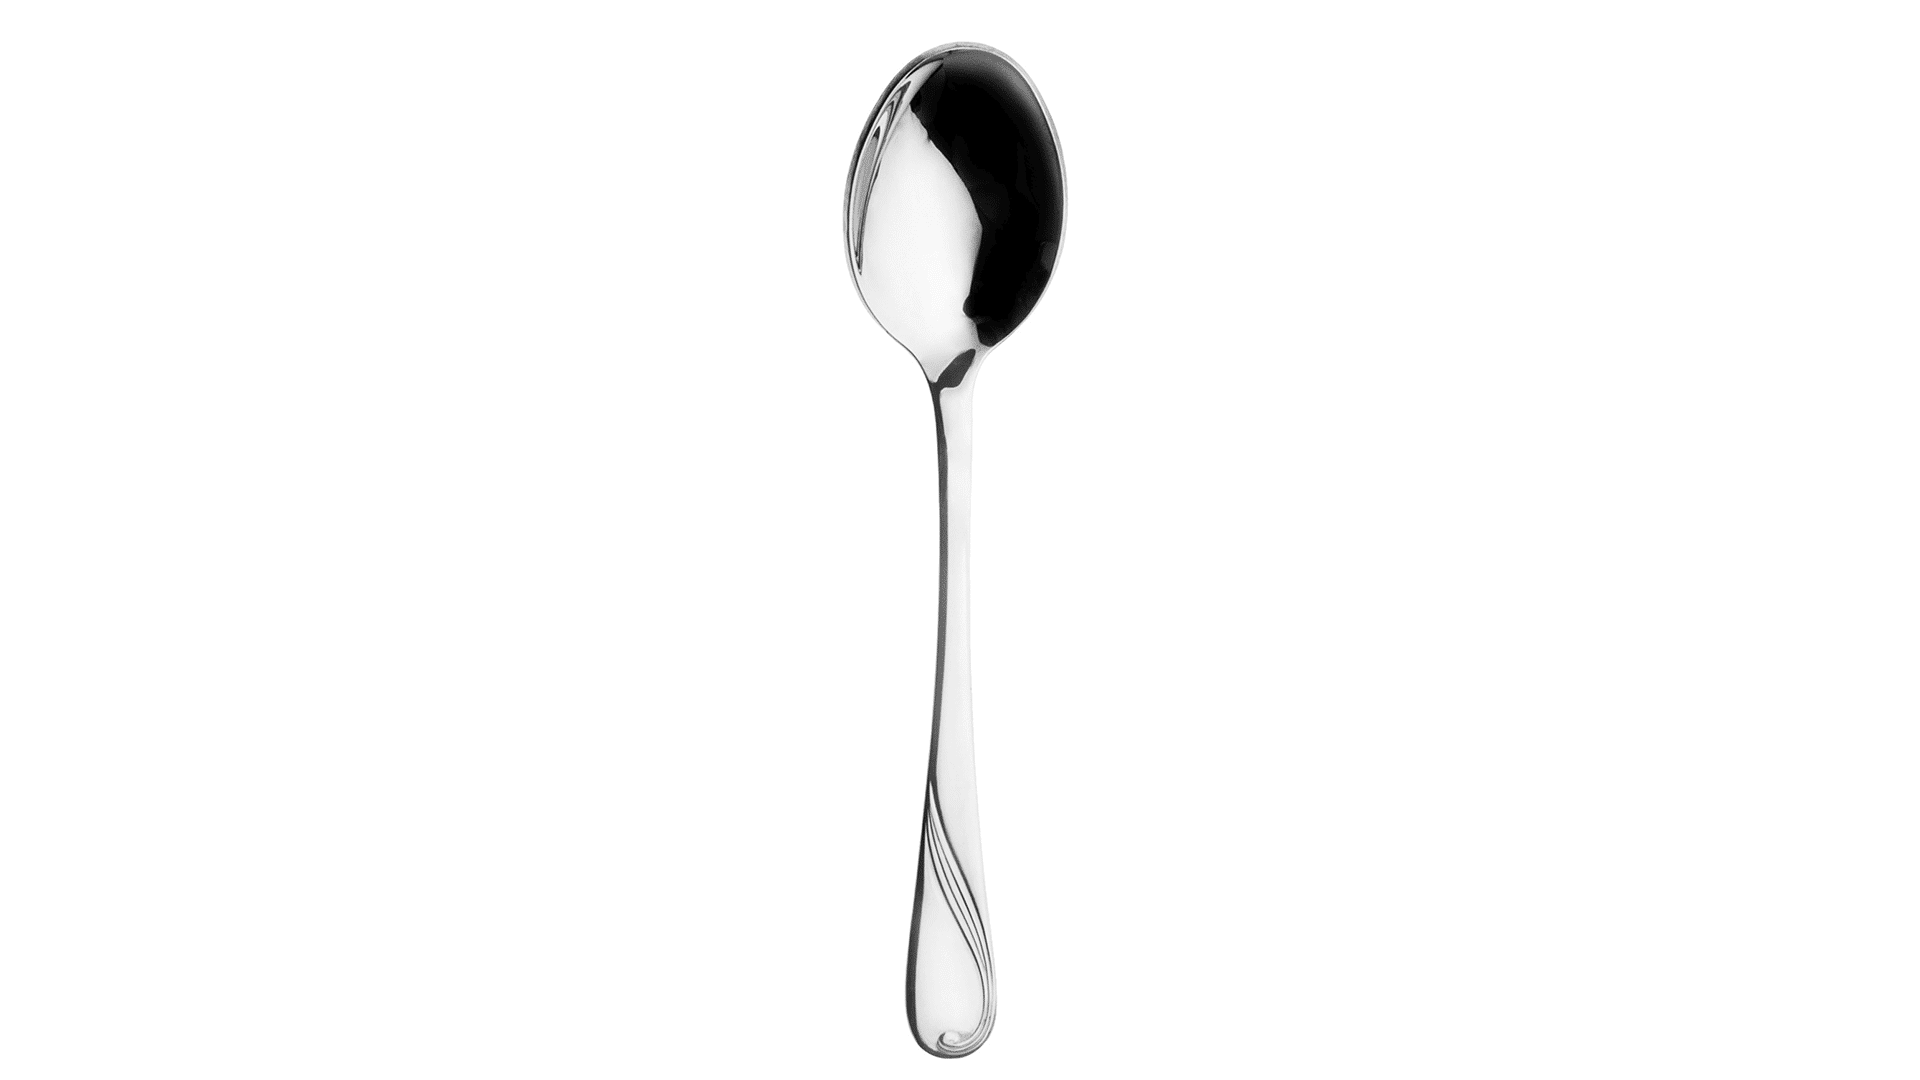 gehring-kaffeeloeffel-menu-cutlery-dolce-30-piece-stainless steel handle